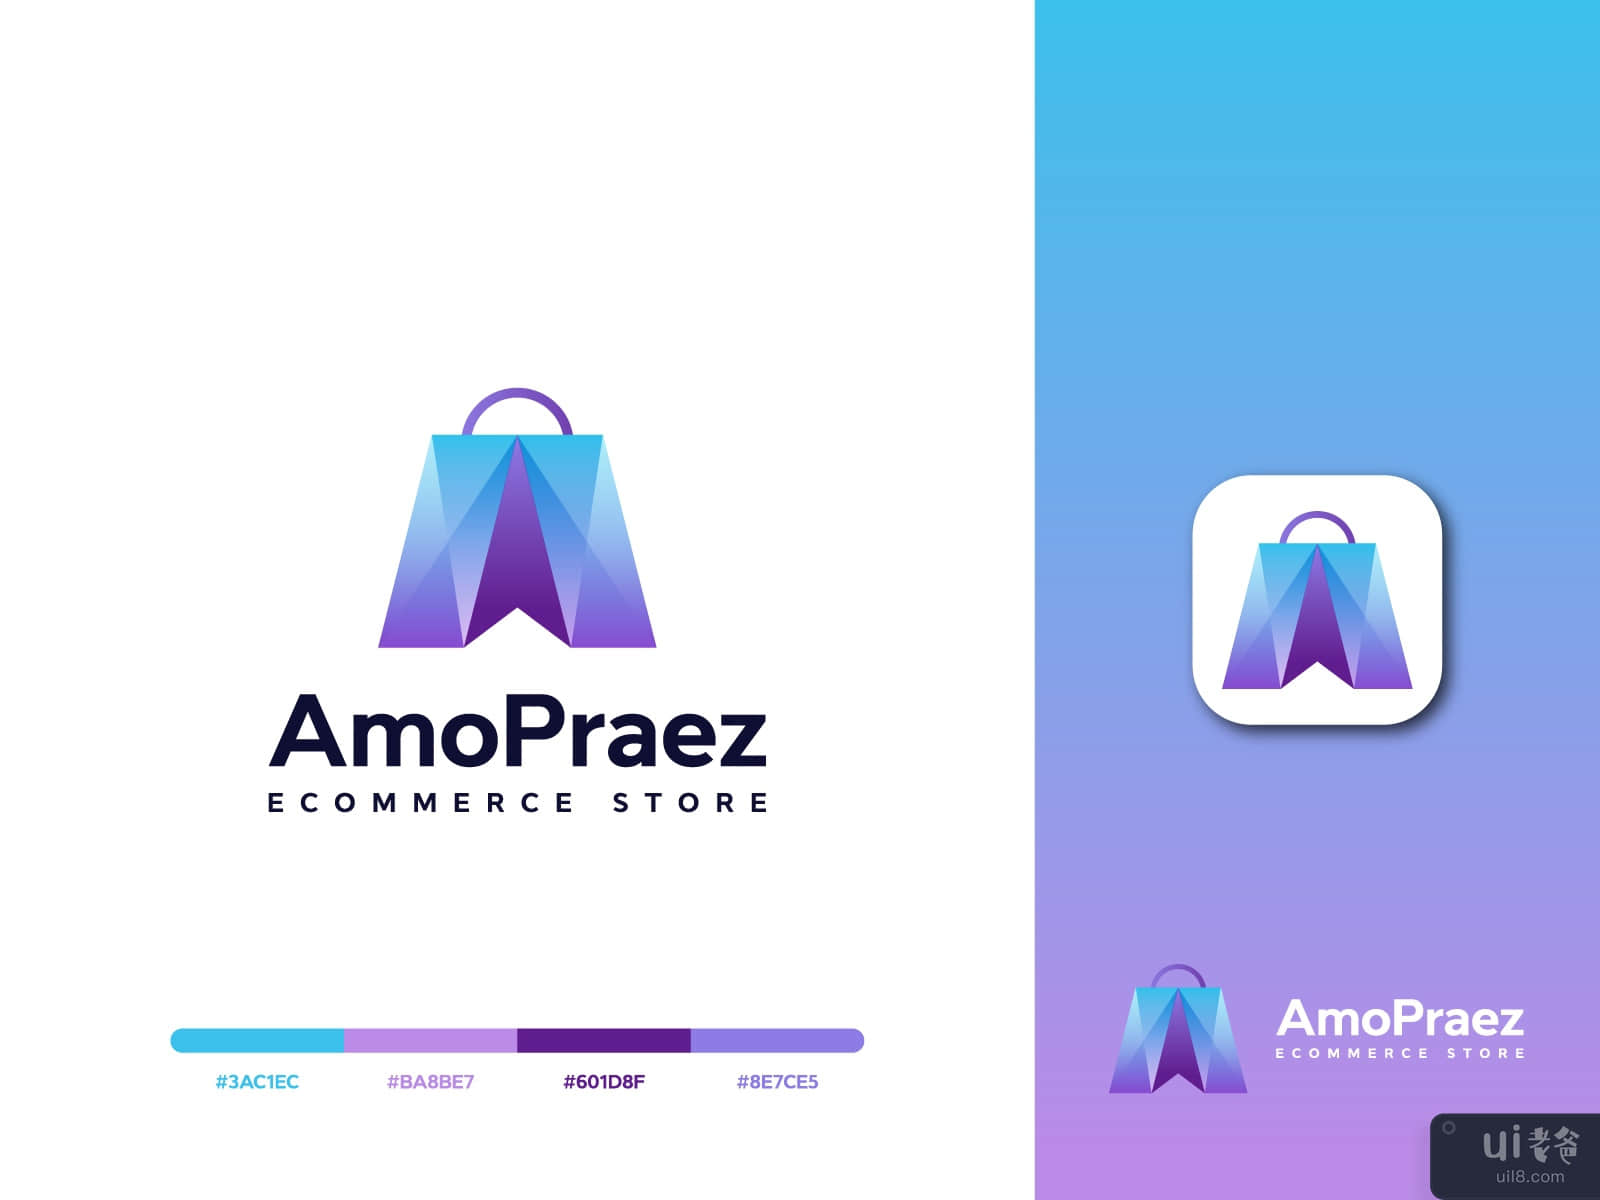 AmoPraez Modern Ecommerce Shop Logo Design